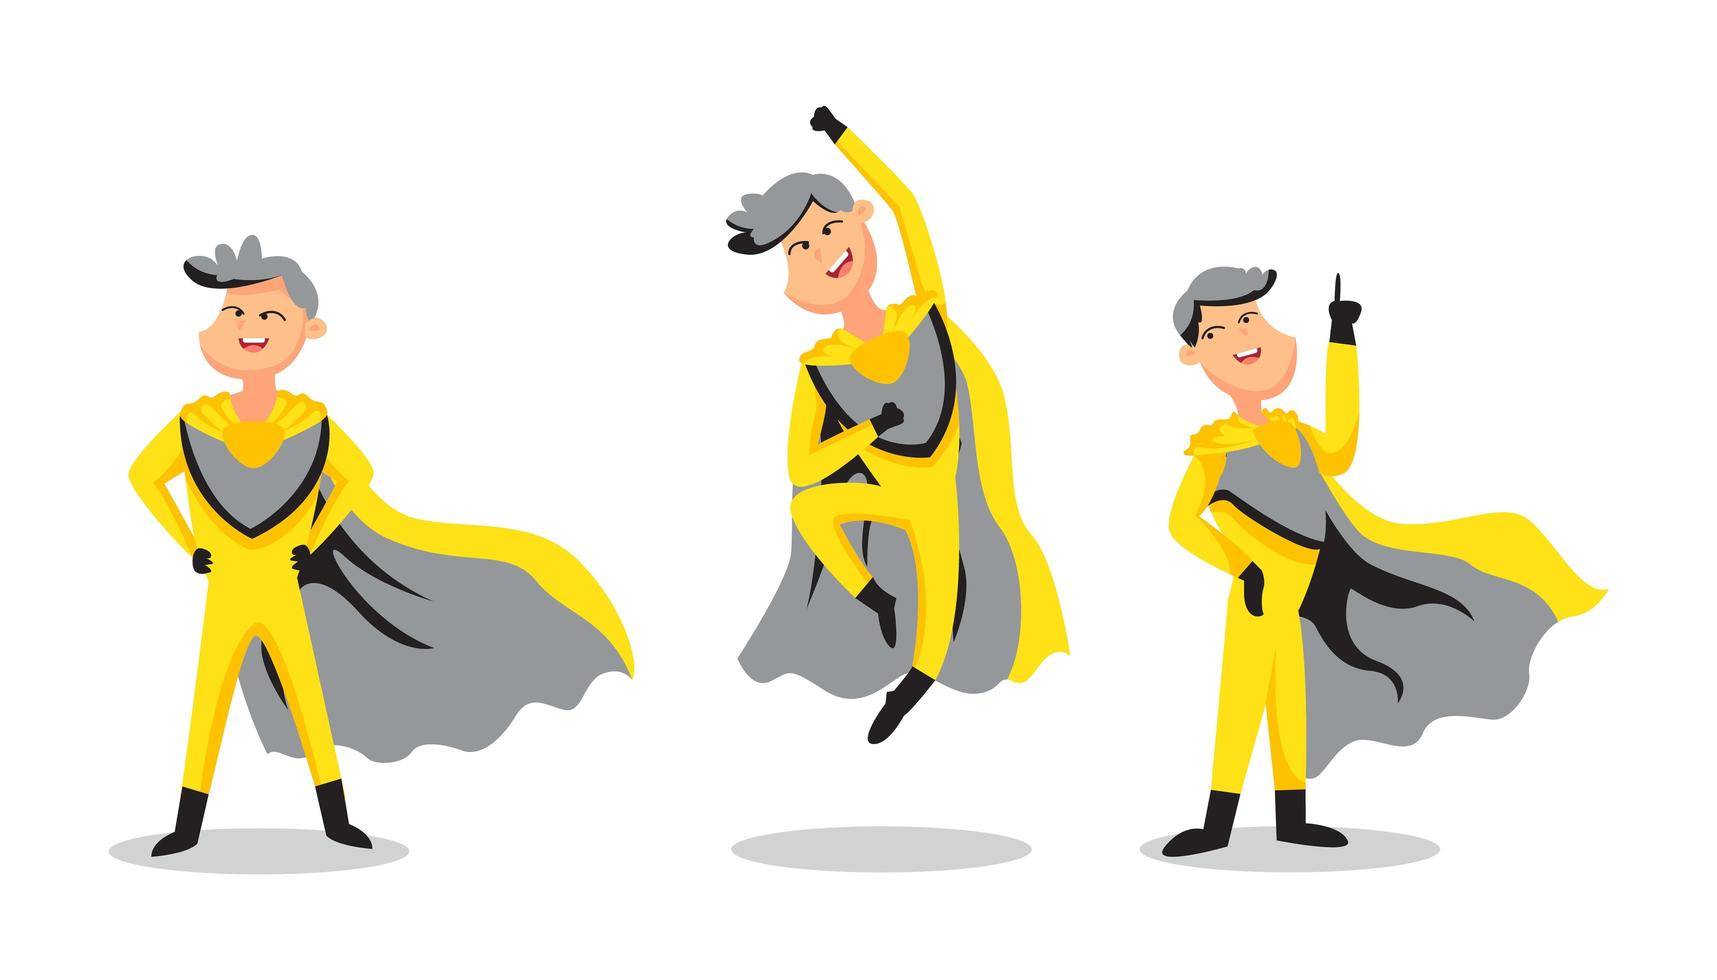 Superhero illustration character vector